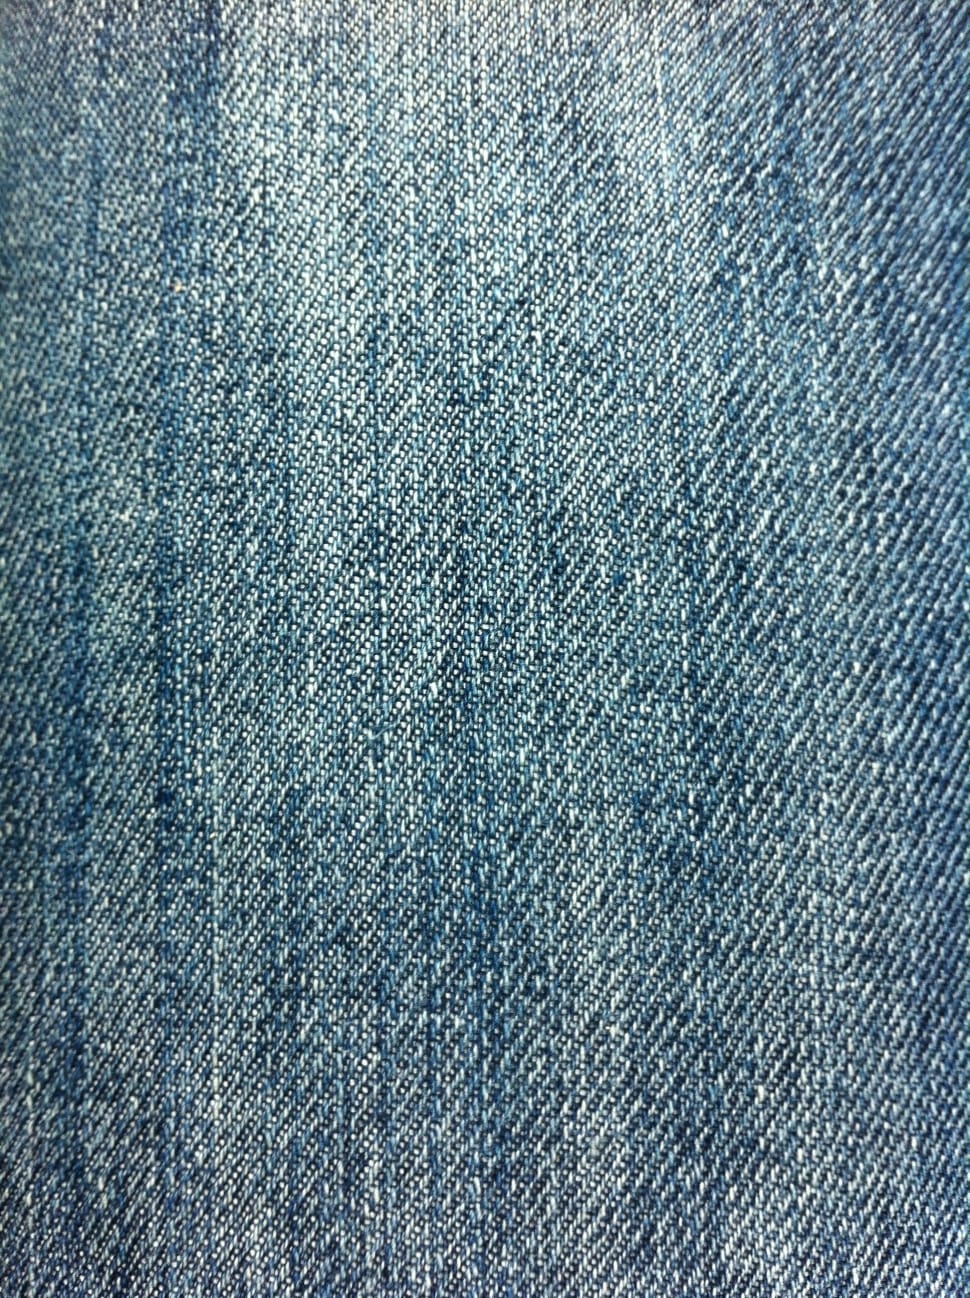 Background, Blue, Jeans, Texture, Denim, textured, jeans preview